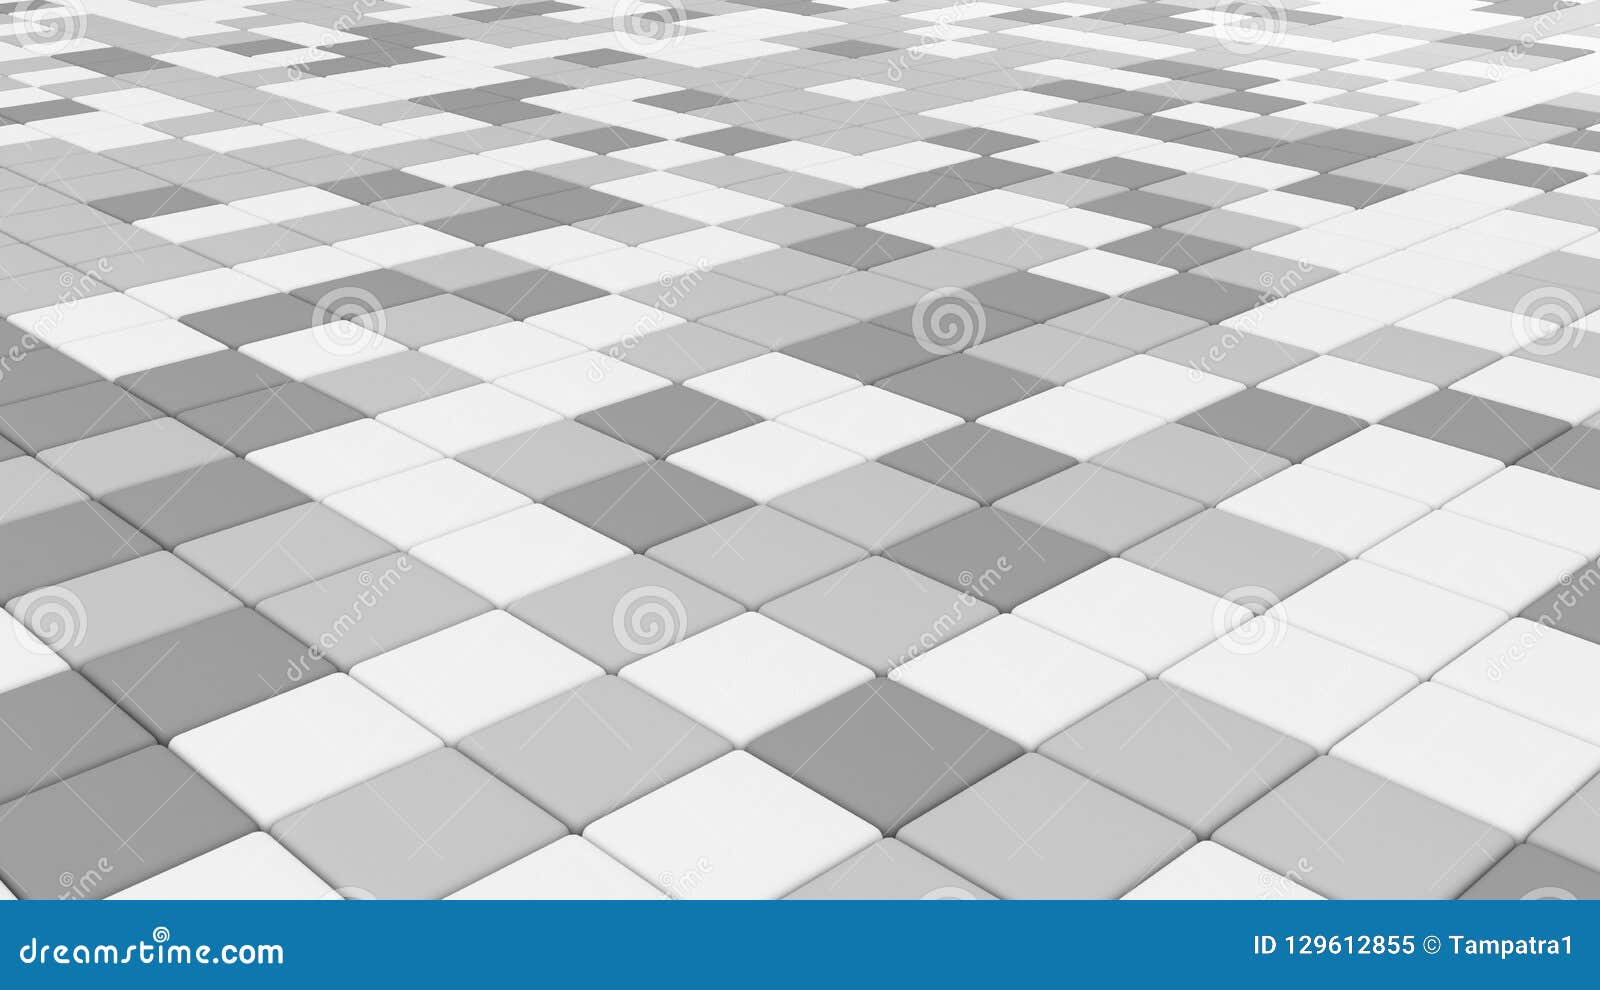 White Tile Flooring Architecture Pattern Texture Background 3d